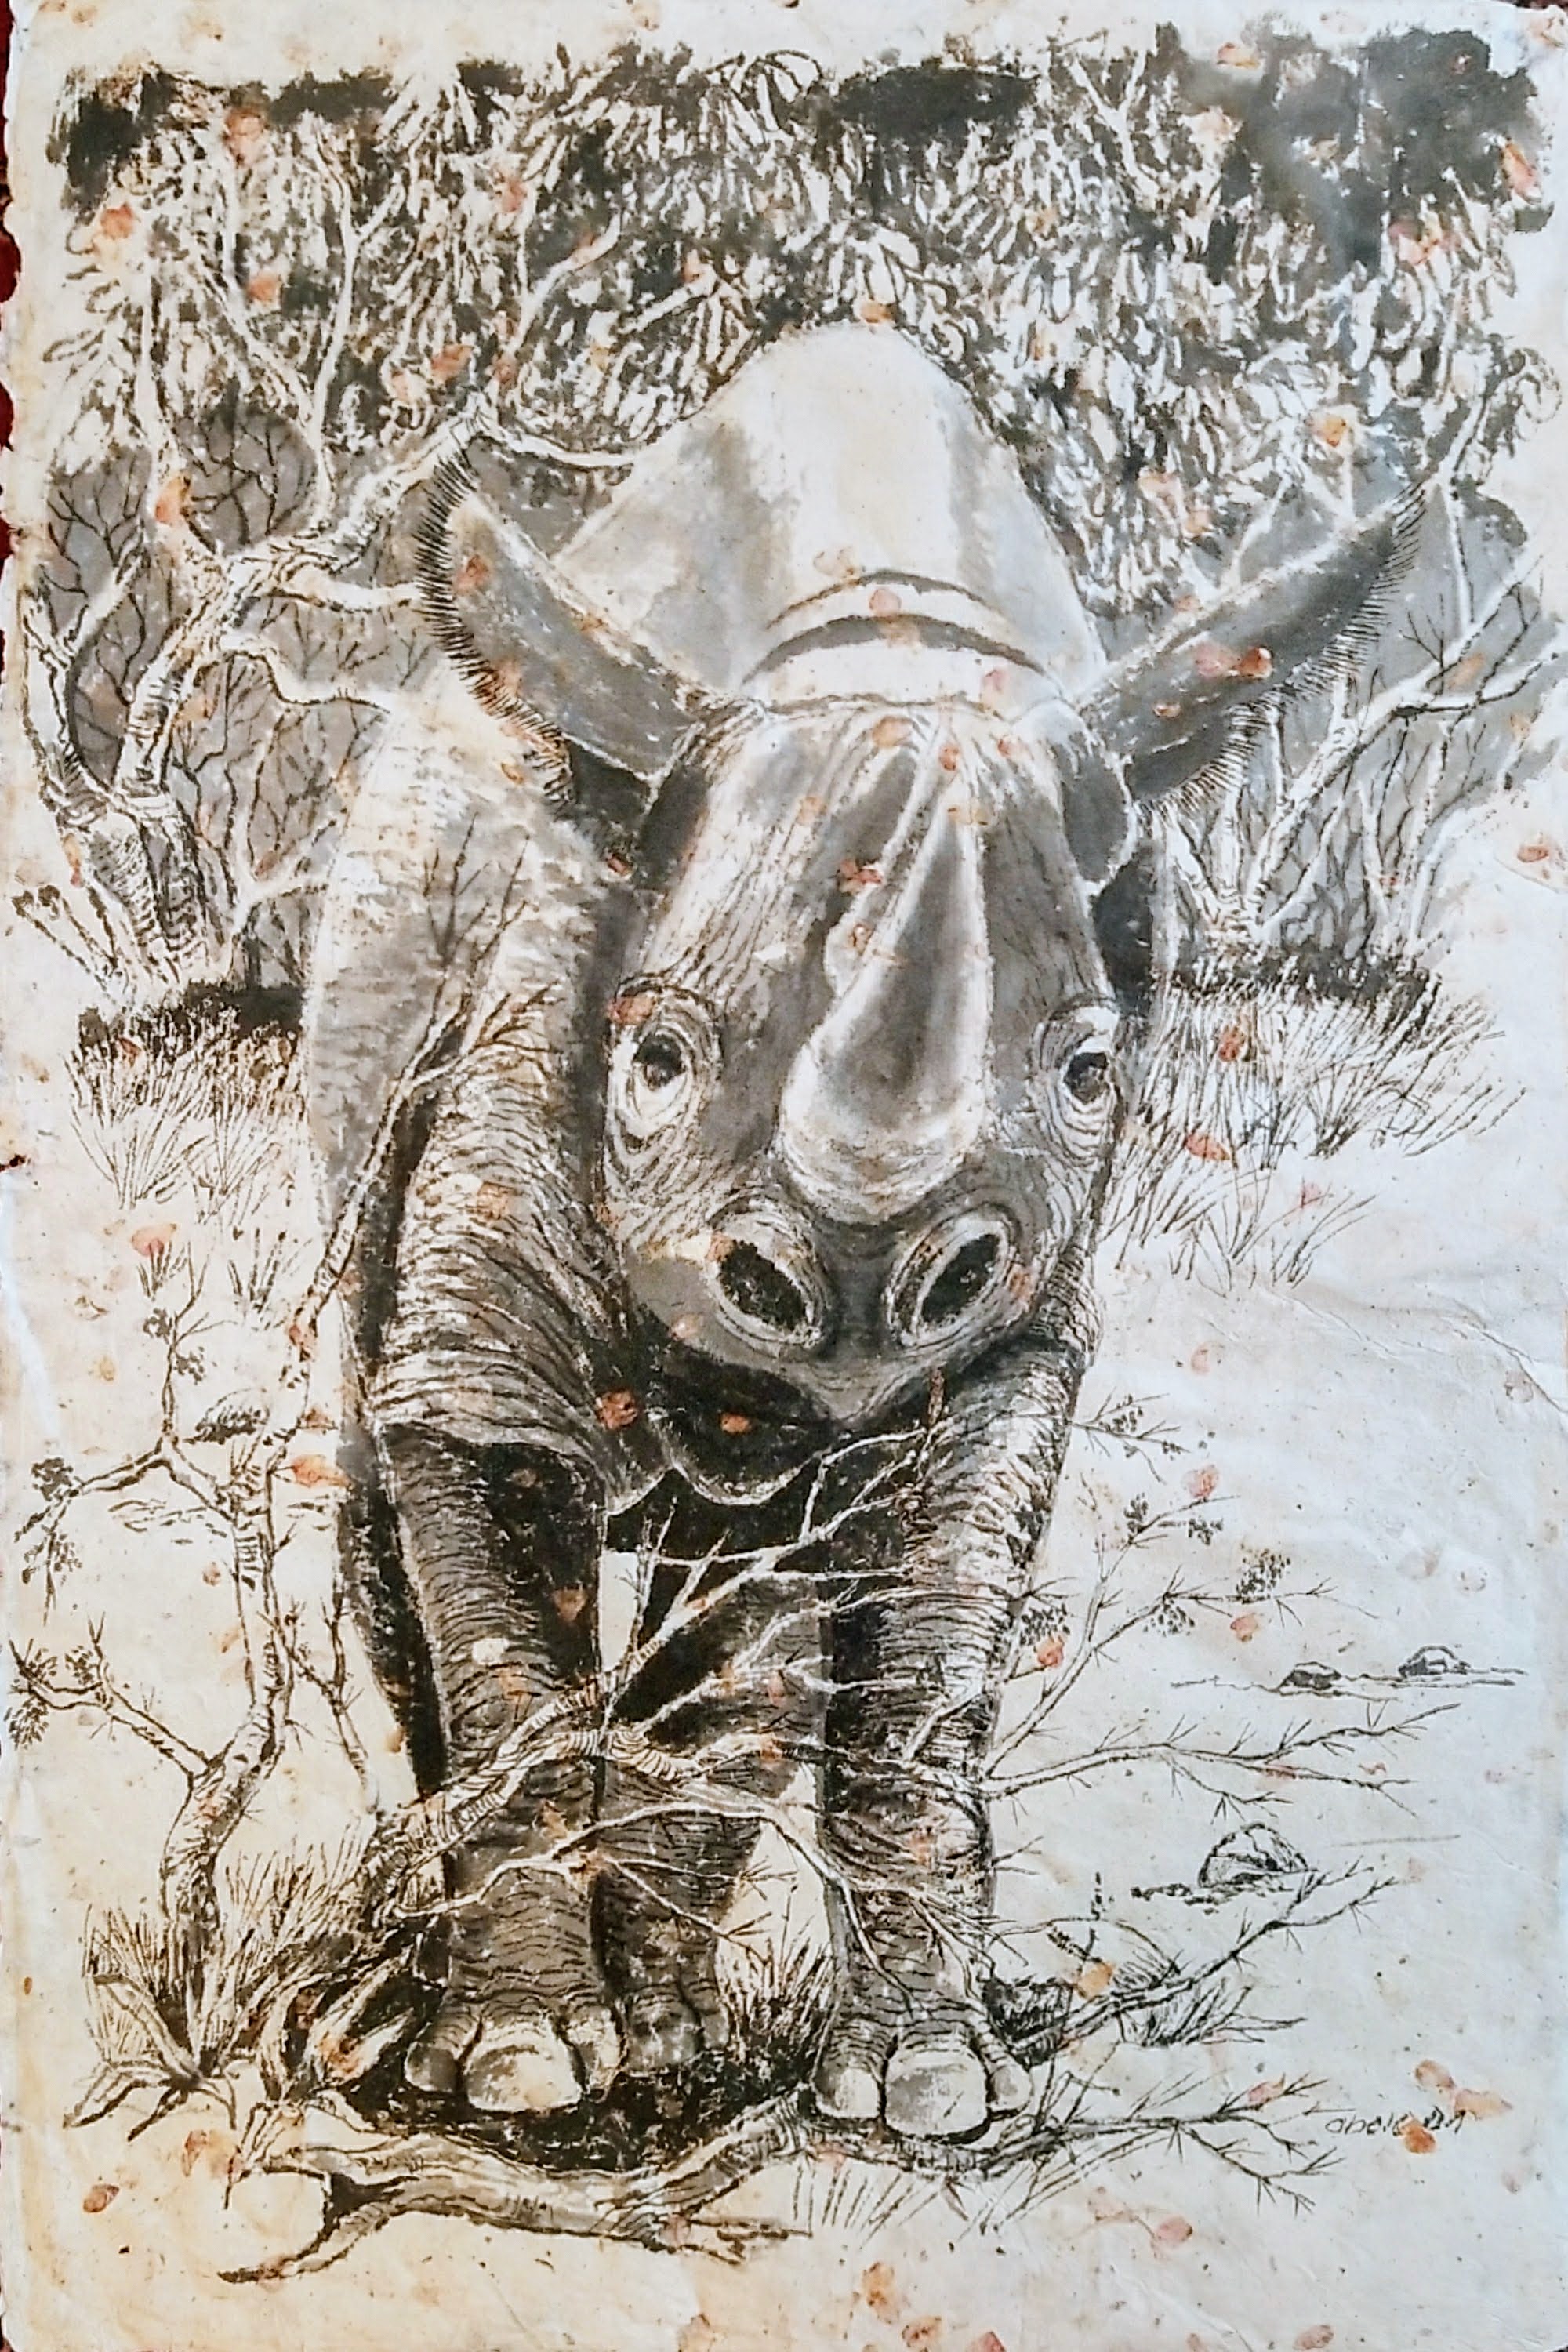 Black Rhino at Momella / Spitzmaulnashorn an Momella 